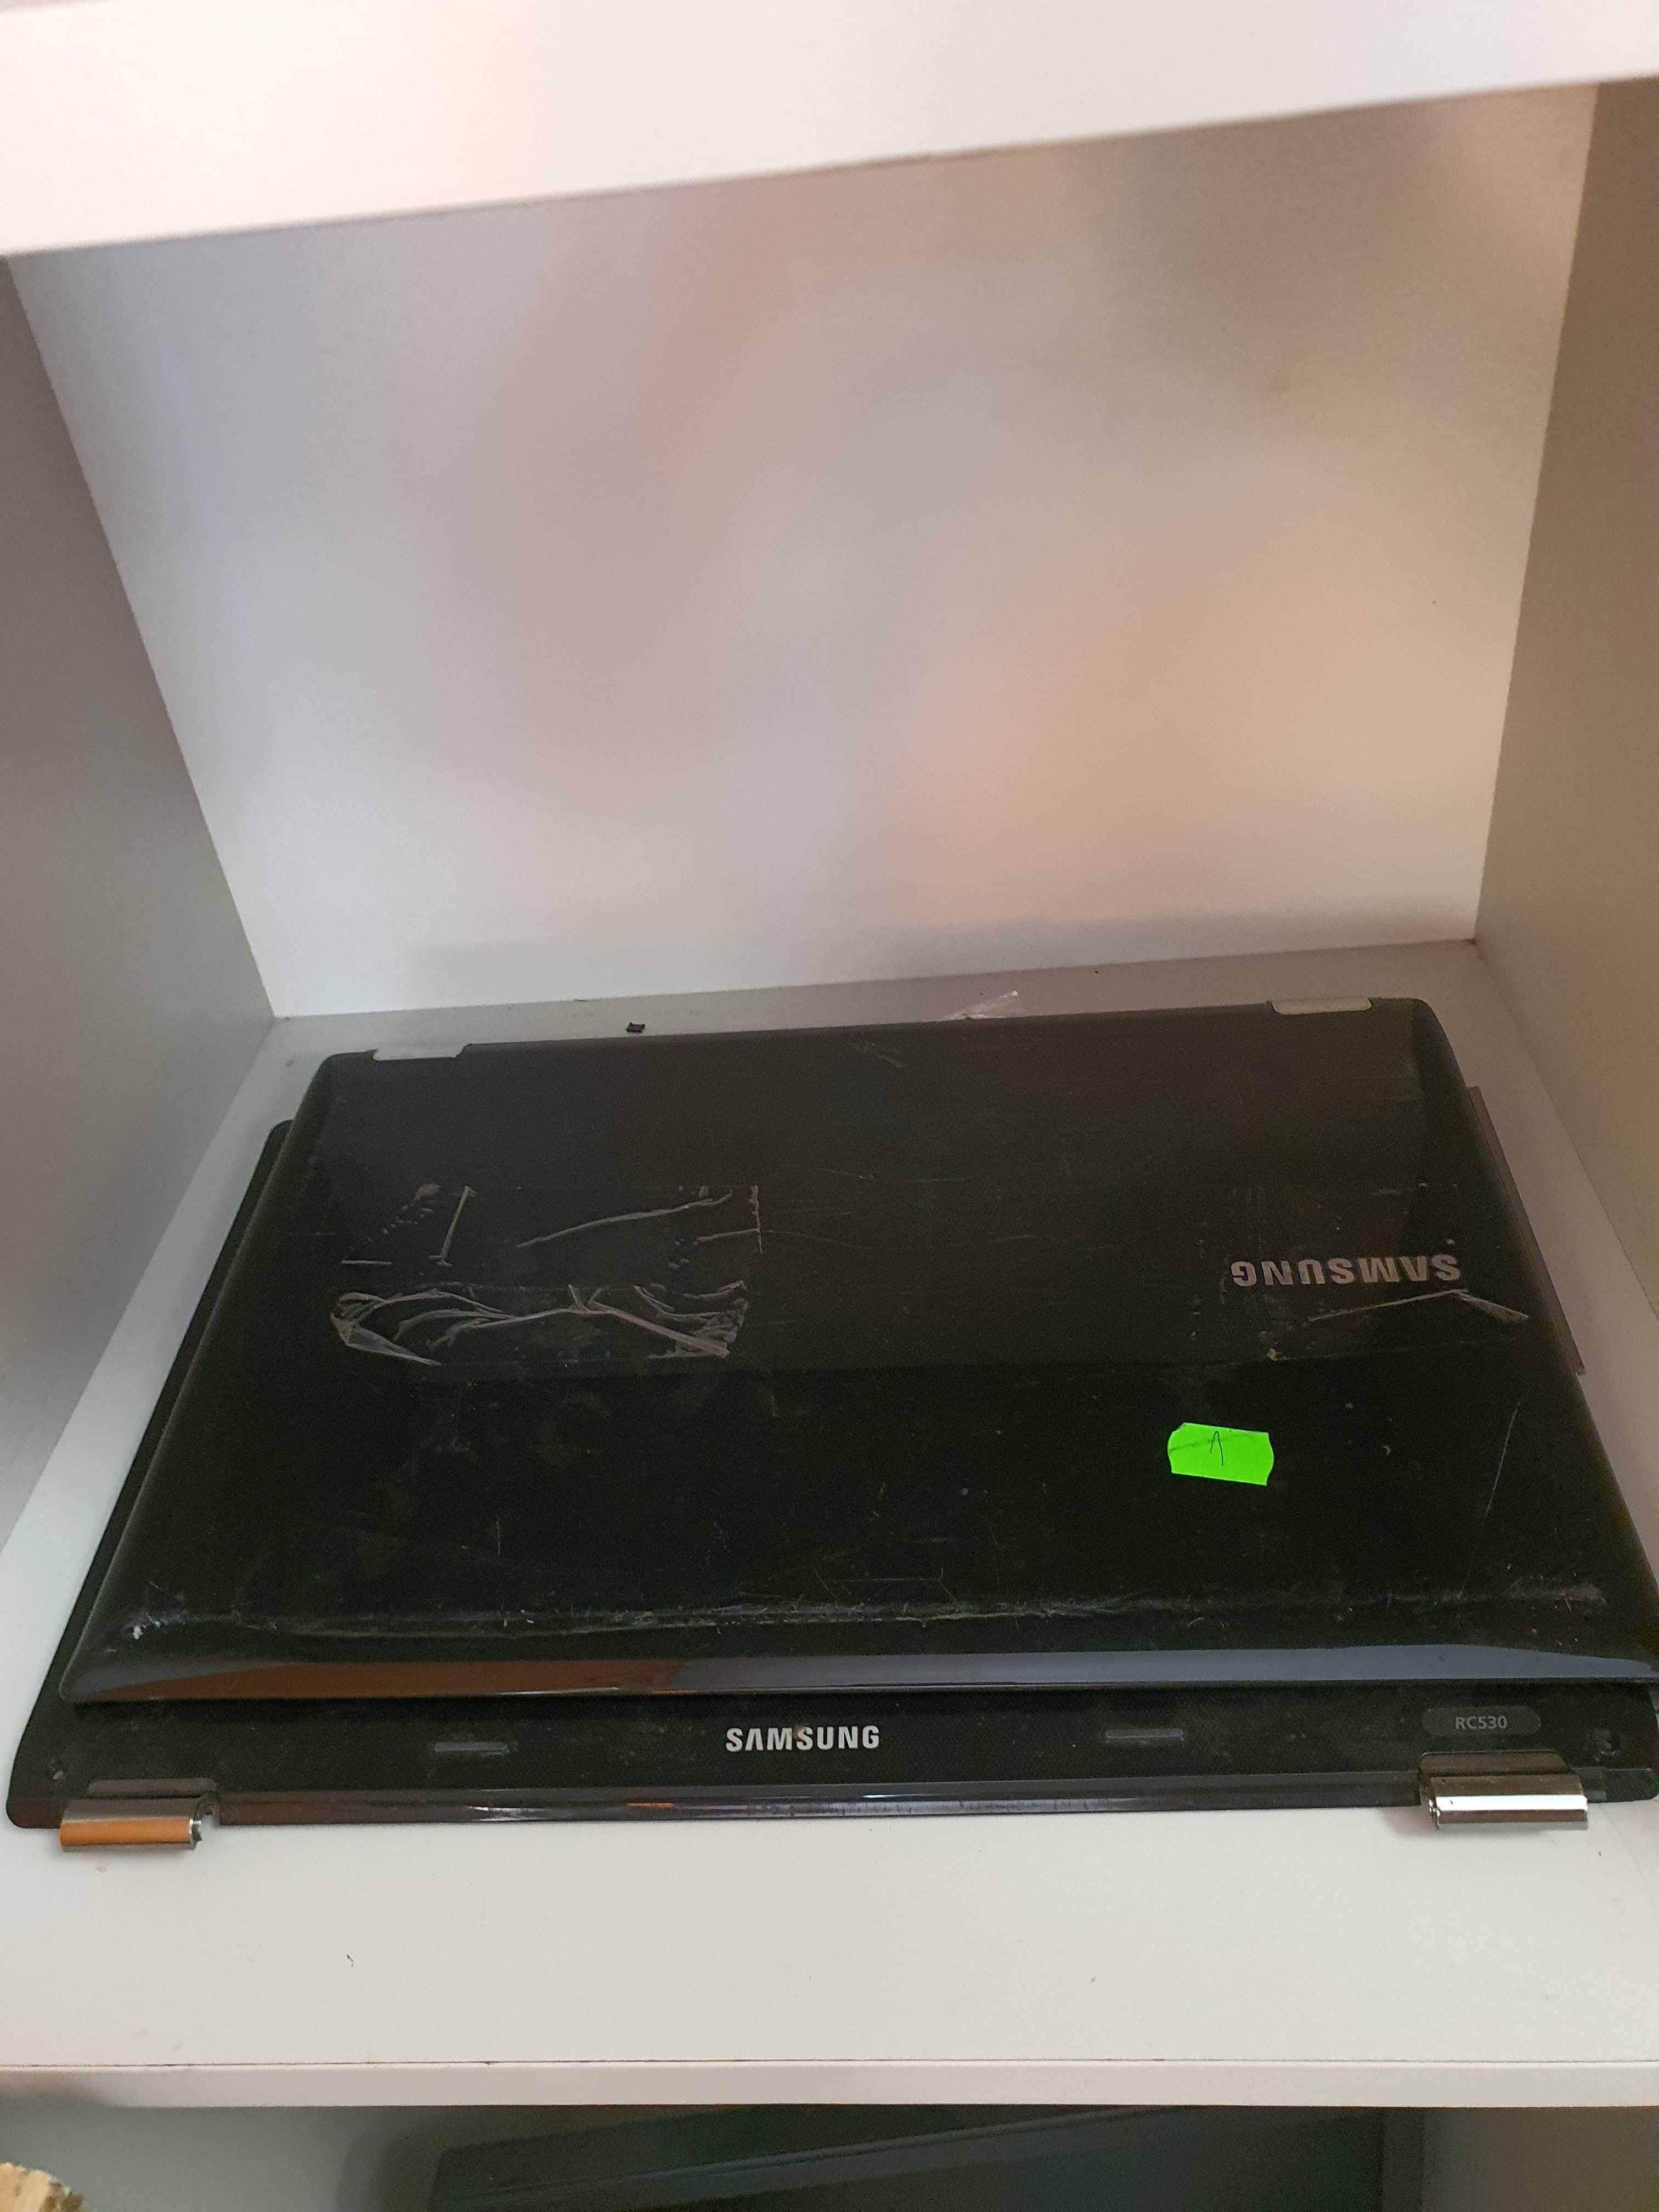 Laptop Samsung RC530